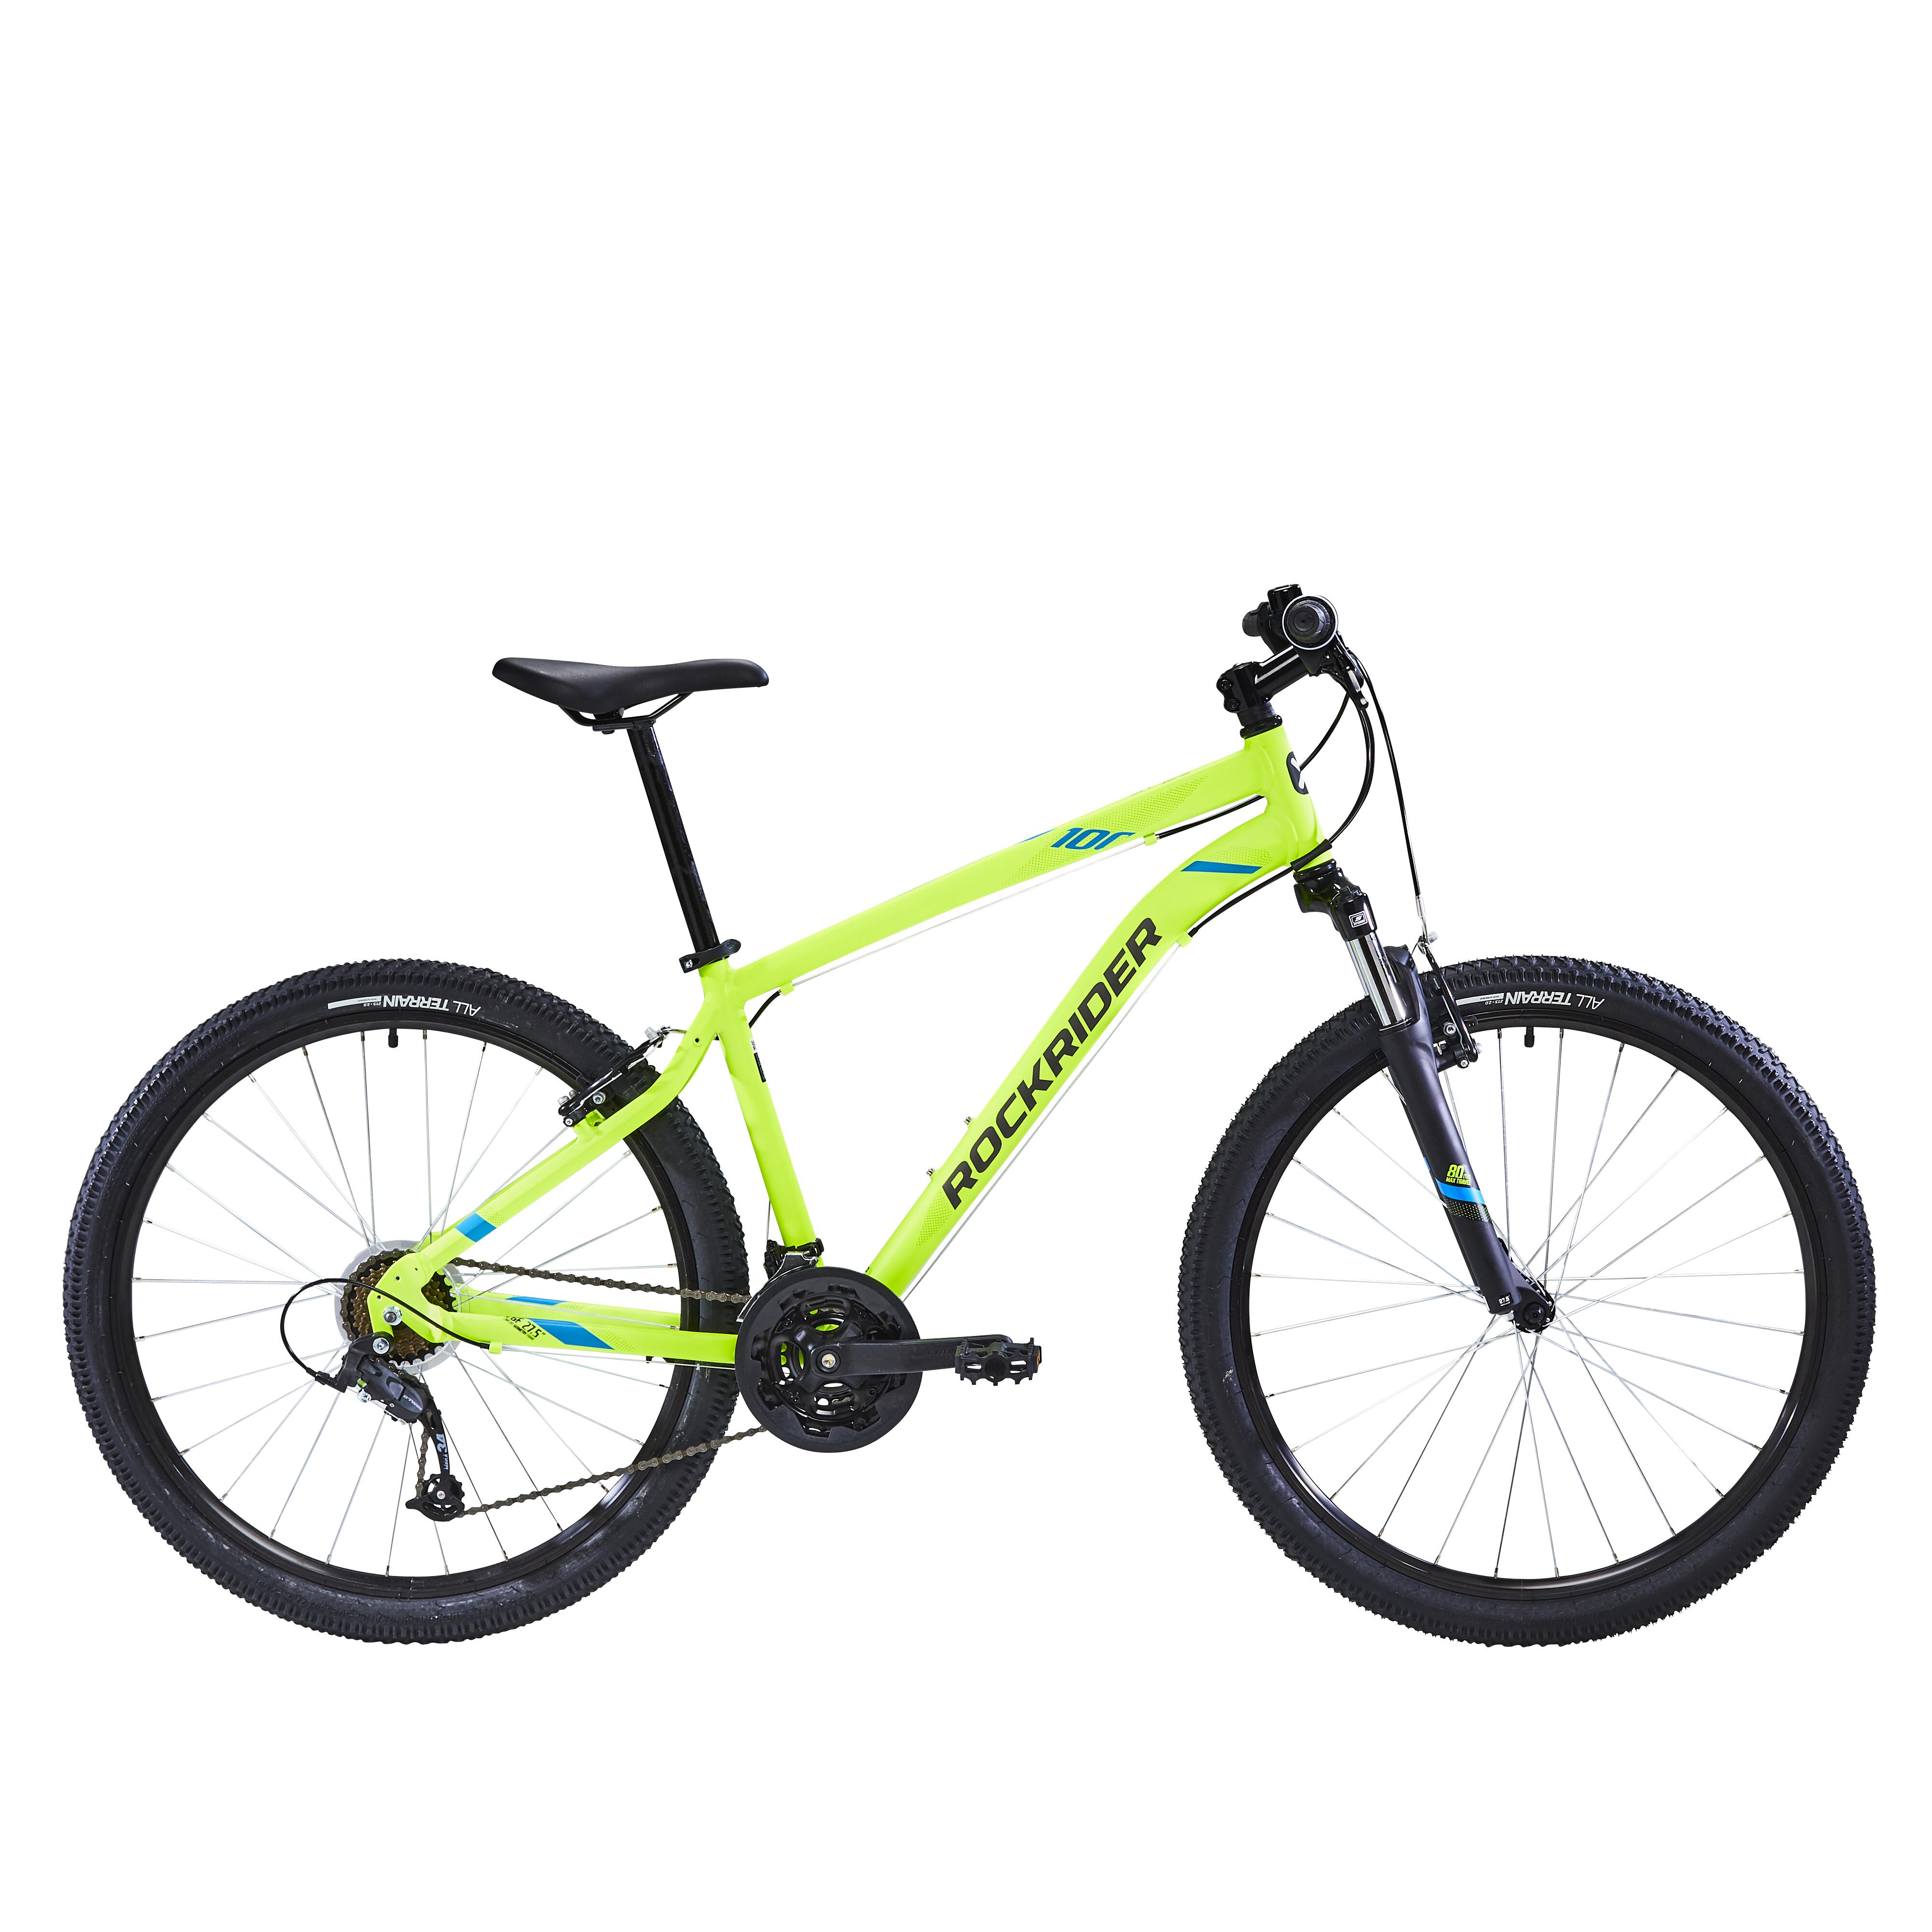 Bicicletă MTB ST 100 27,5″ Galben Fluorescent decathlon.ro